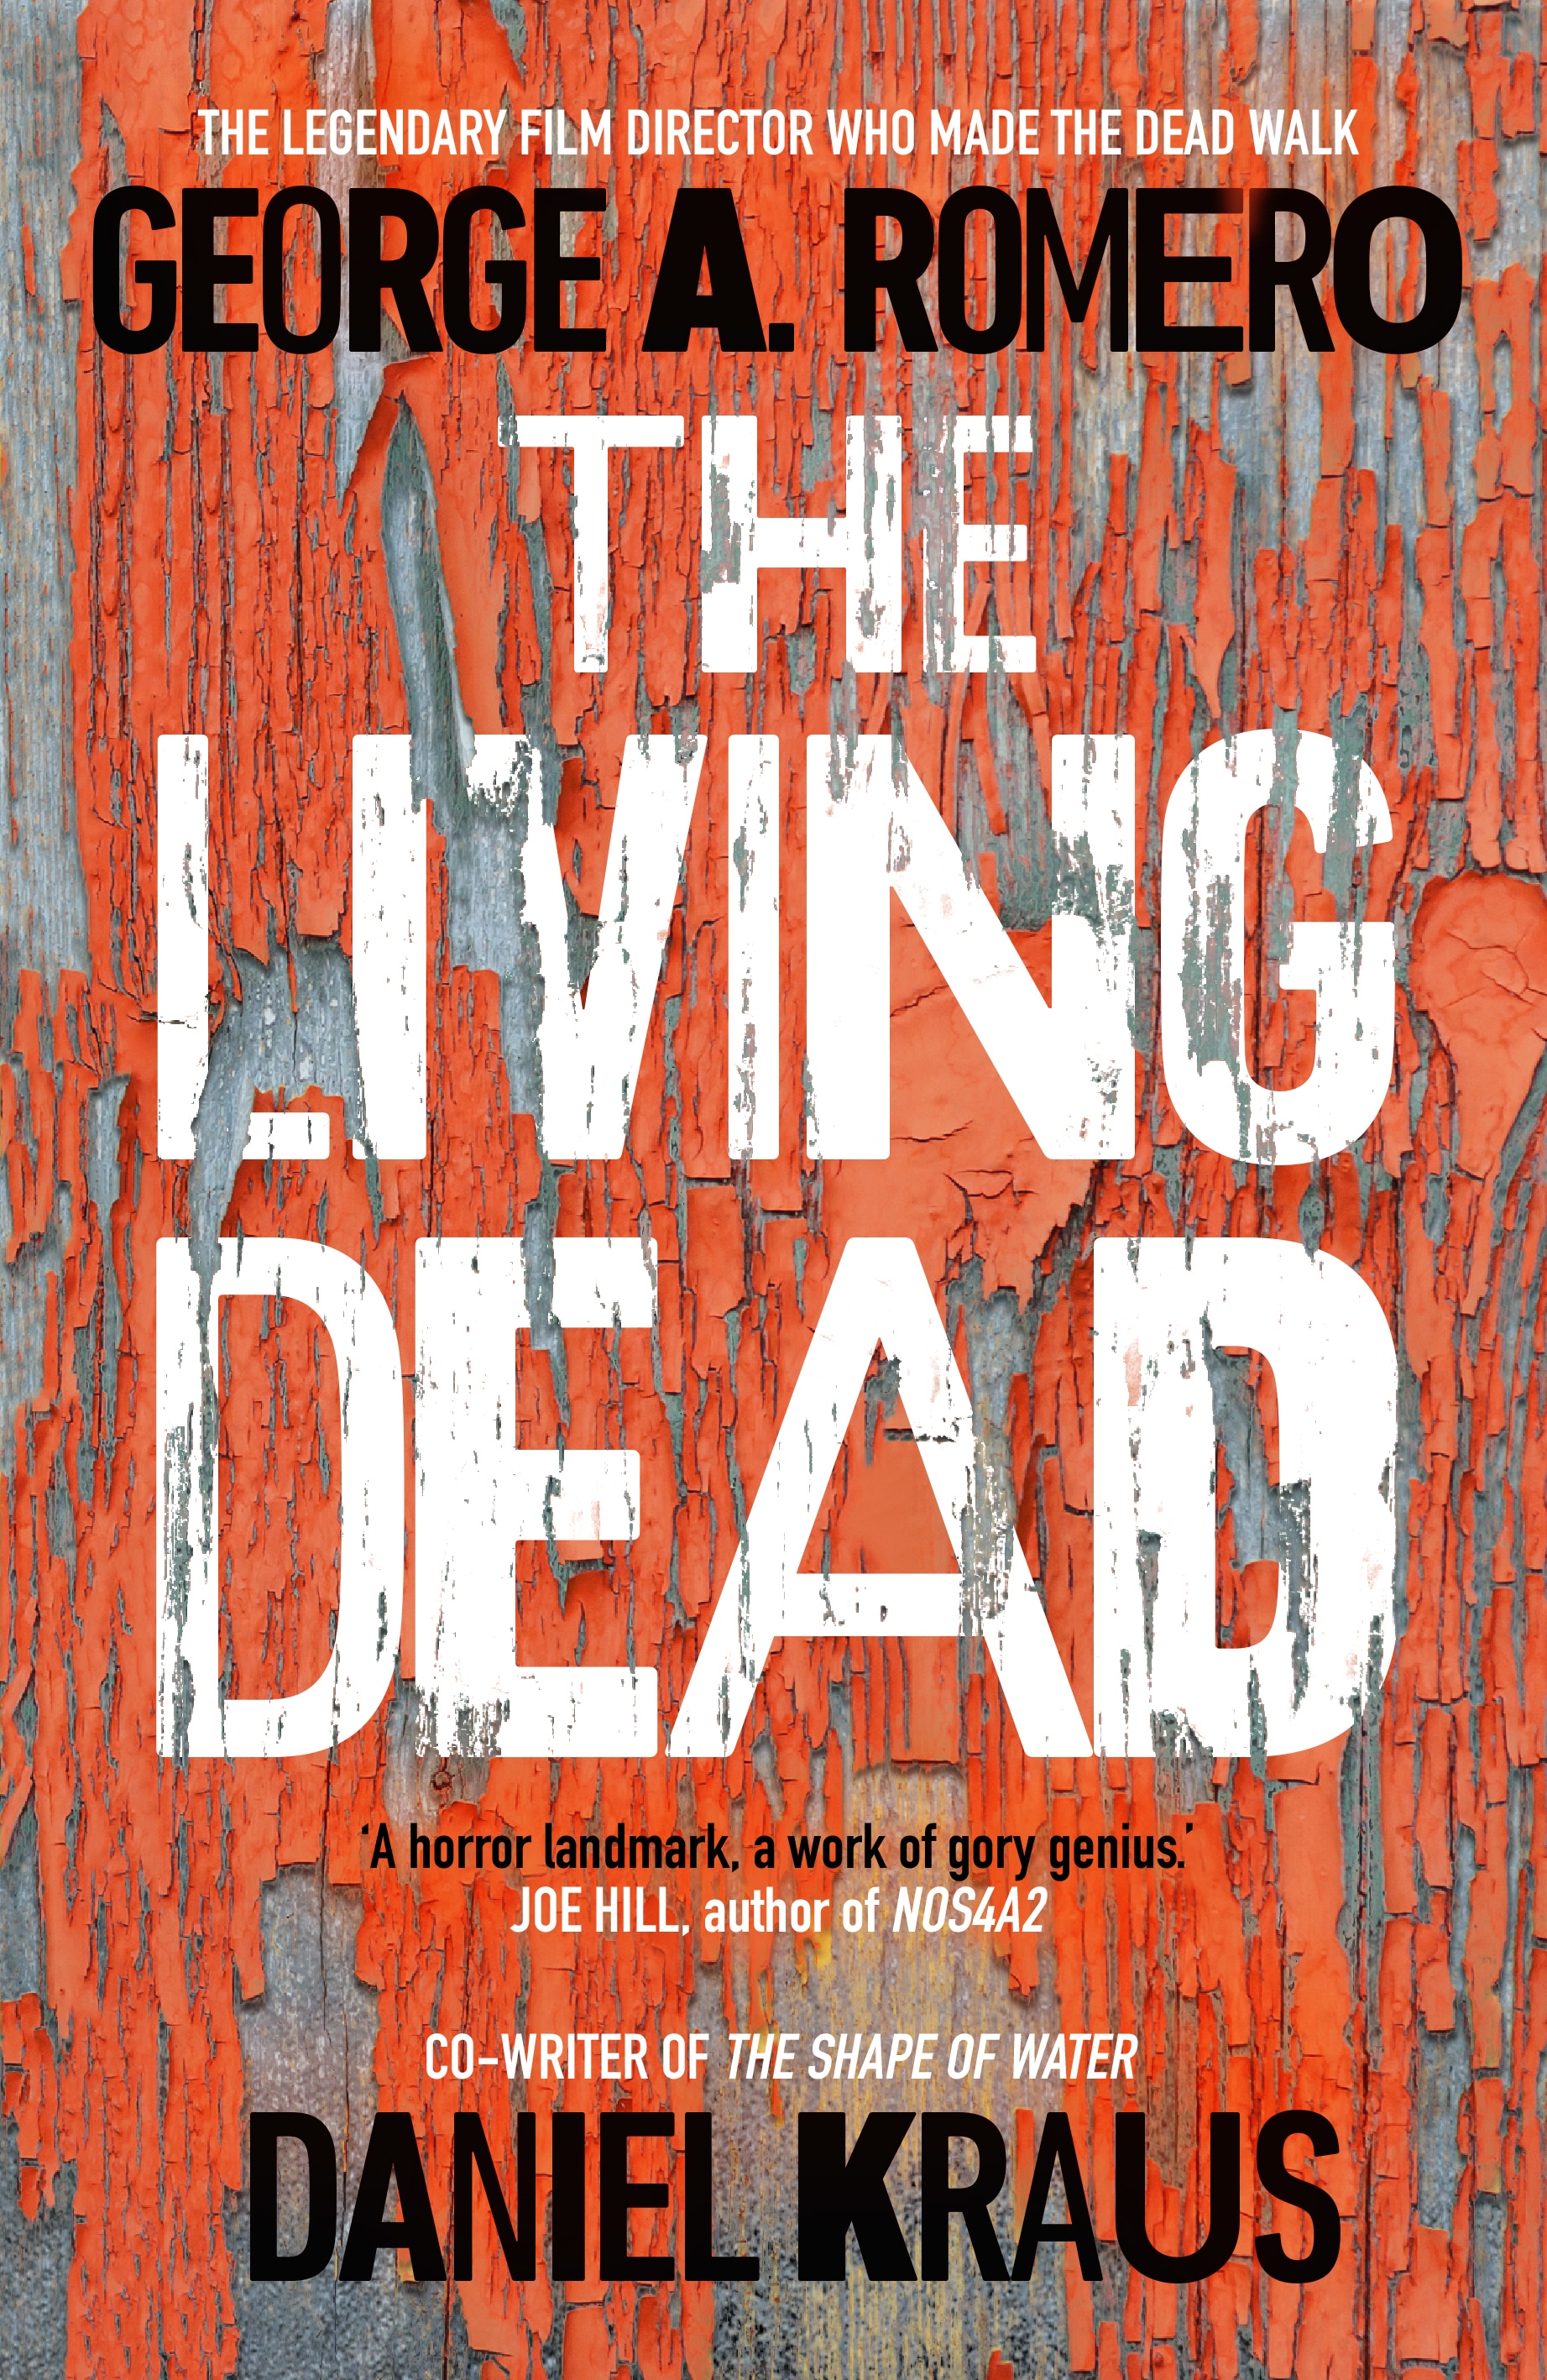 Book “The Living Dead” by George A. Romero, Daniel Kraus — August 6, 2020